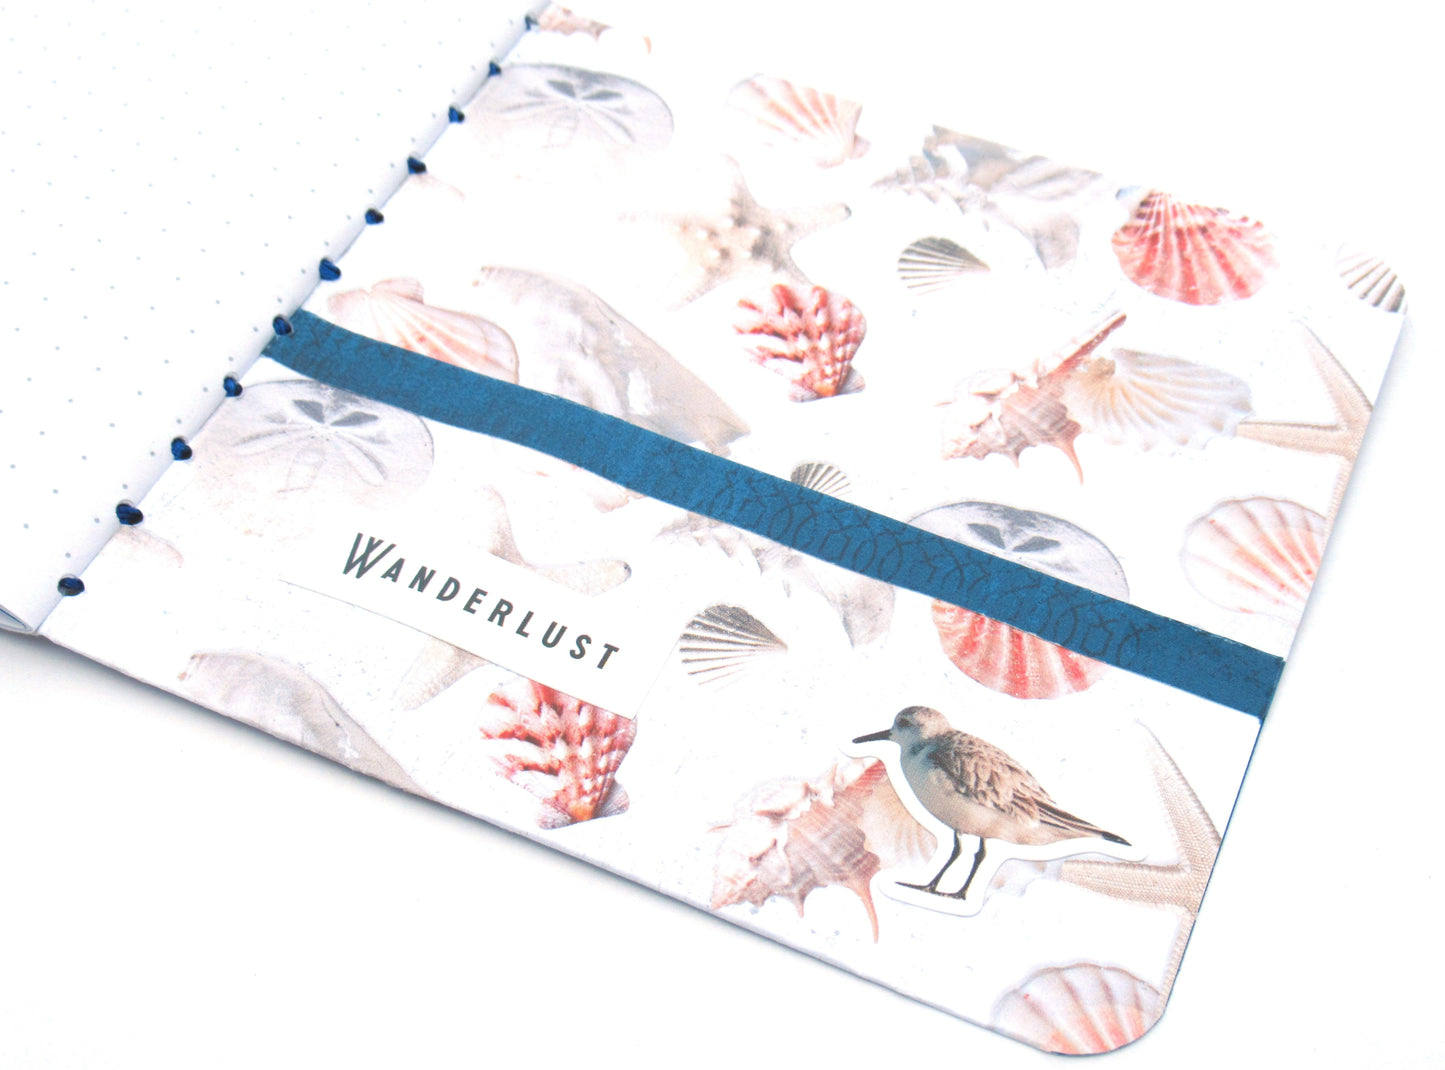 Journal - Handmade JOURNAL - Soft Cover Journal - Handbound Blank Notebook - Gratitude Journal - Seashore Themed Journal - Stationery - Literacy Project - 109